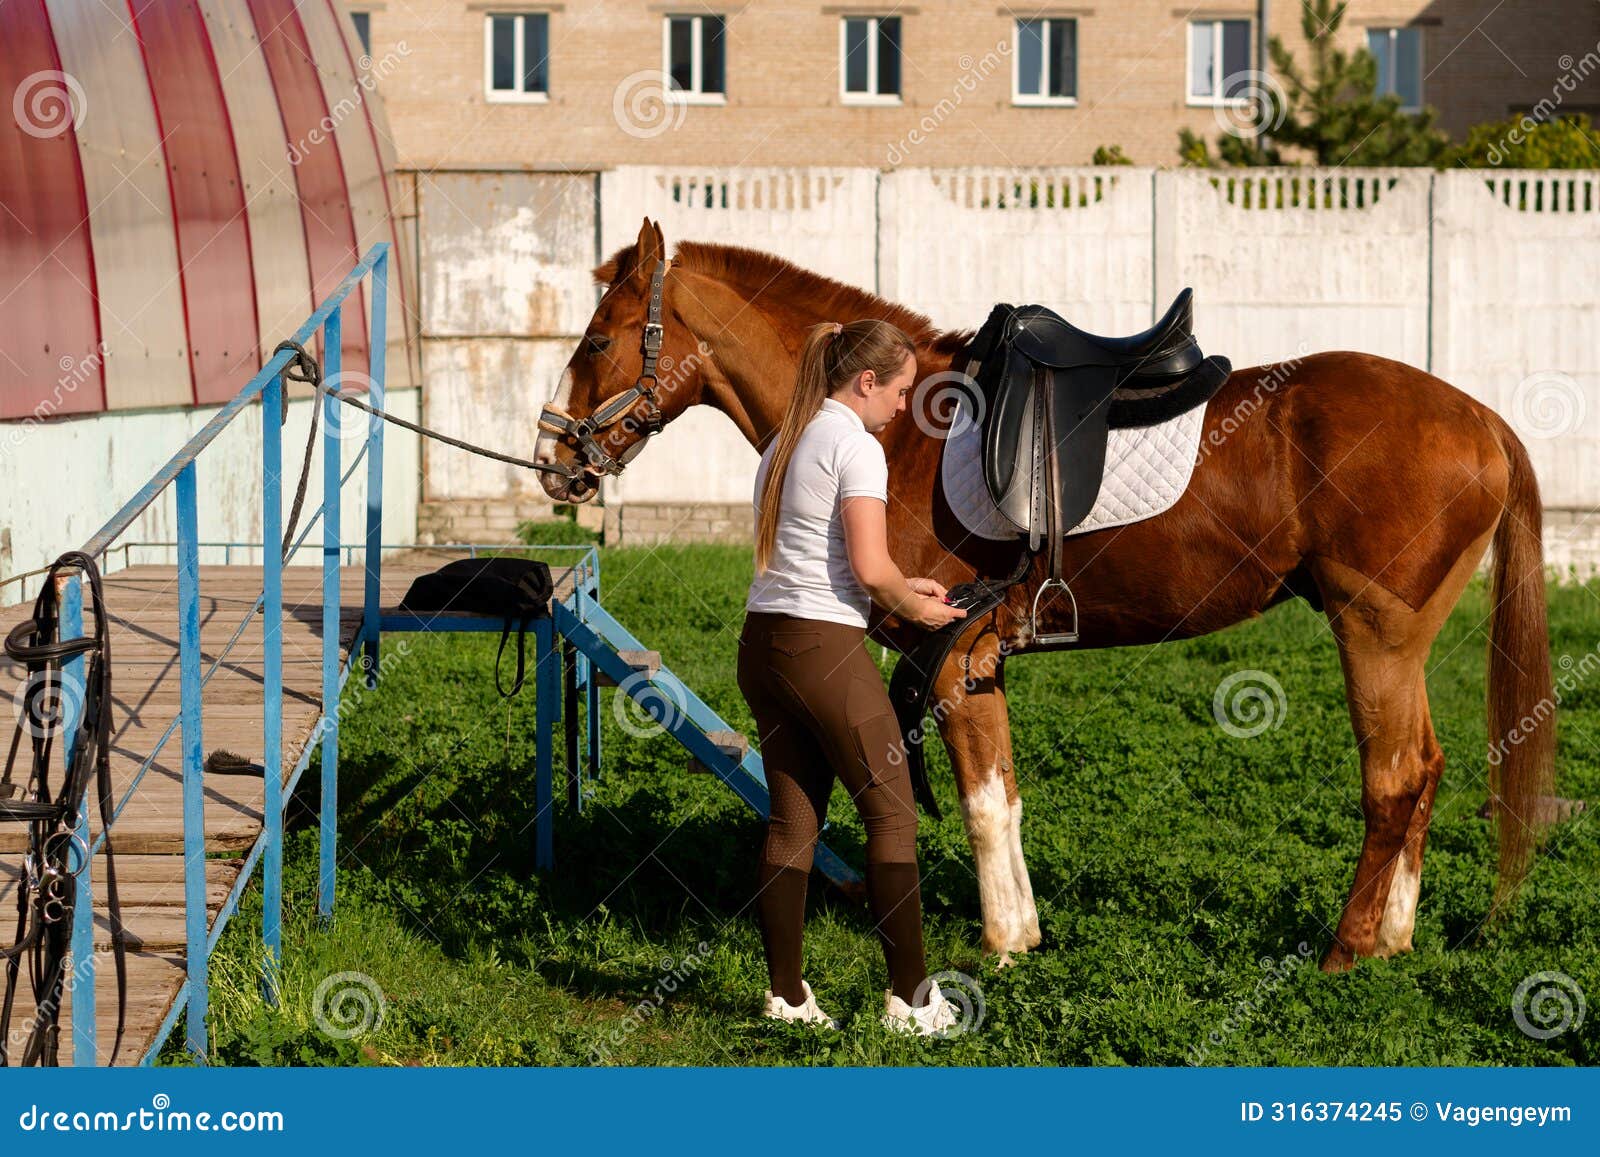 woman fastening girth on saddled horse